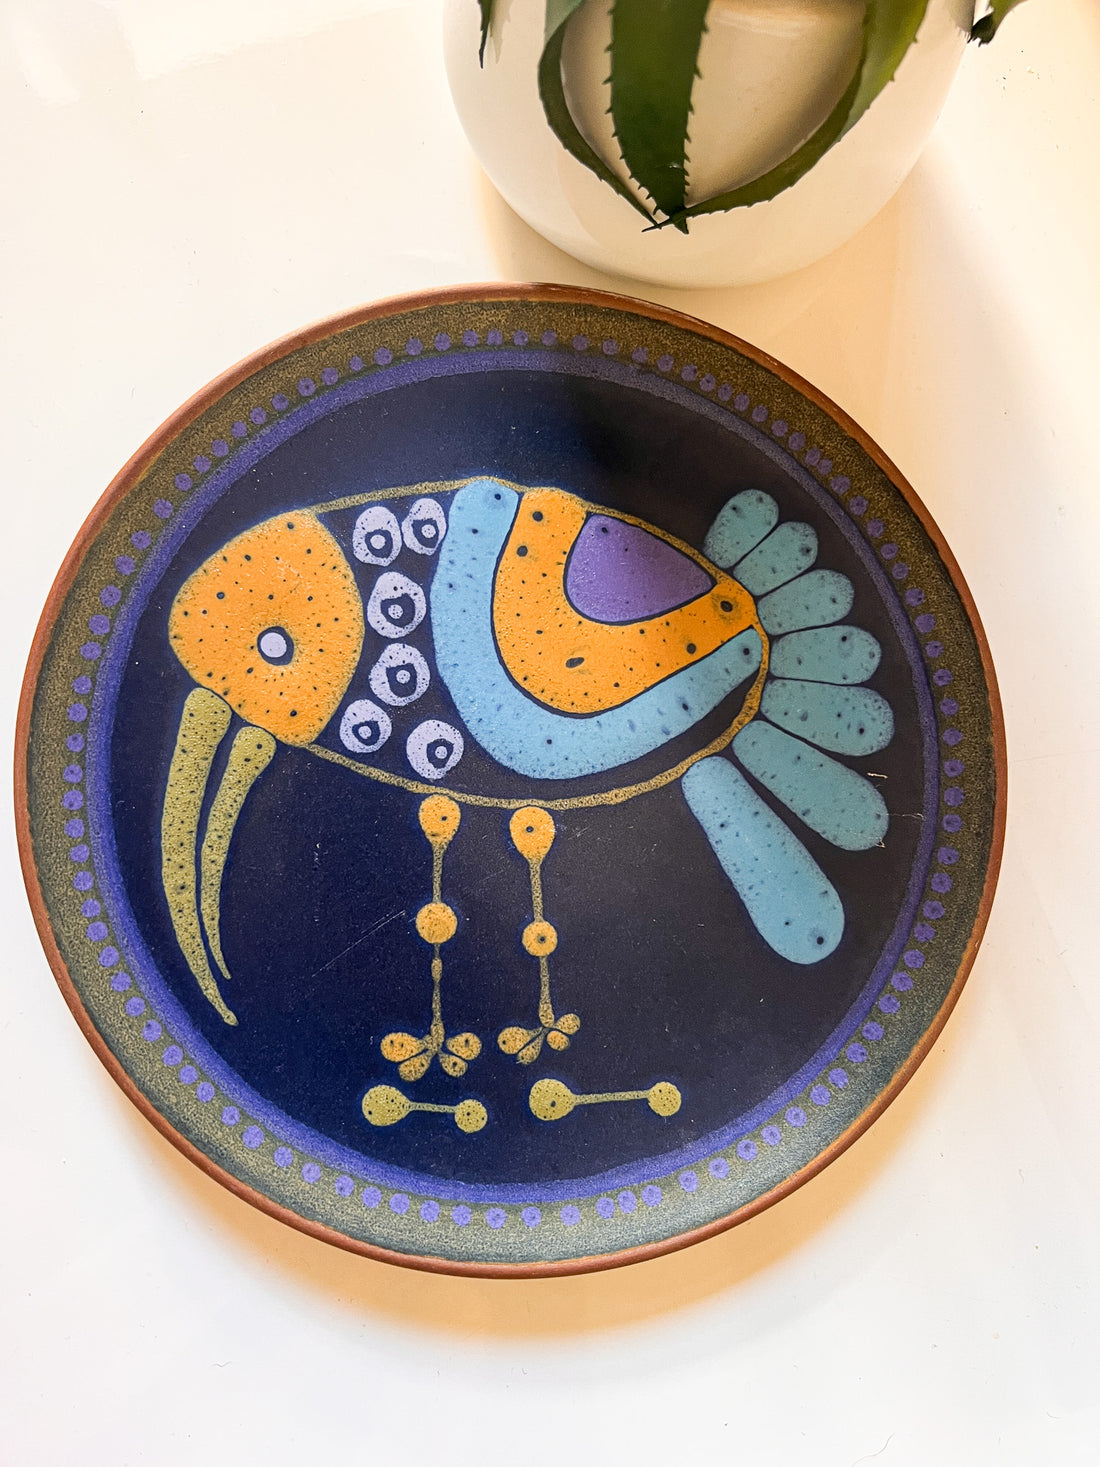 KMK Kupfermühle ceramic plate, Viola Hahn West German mid-century pottery